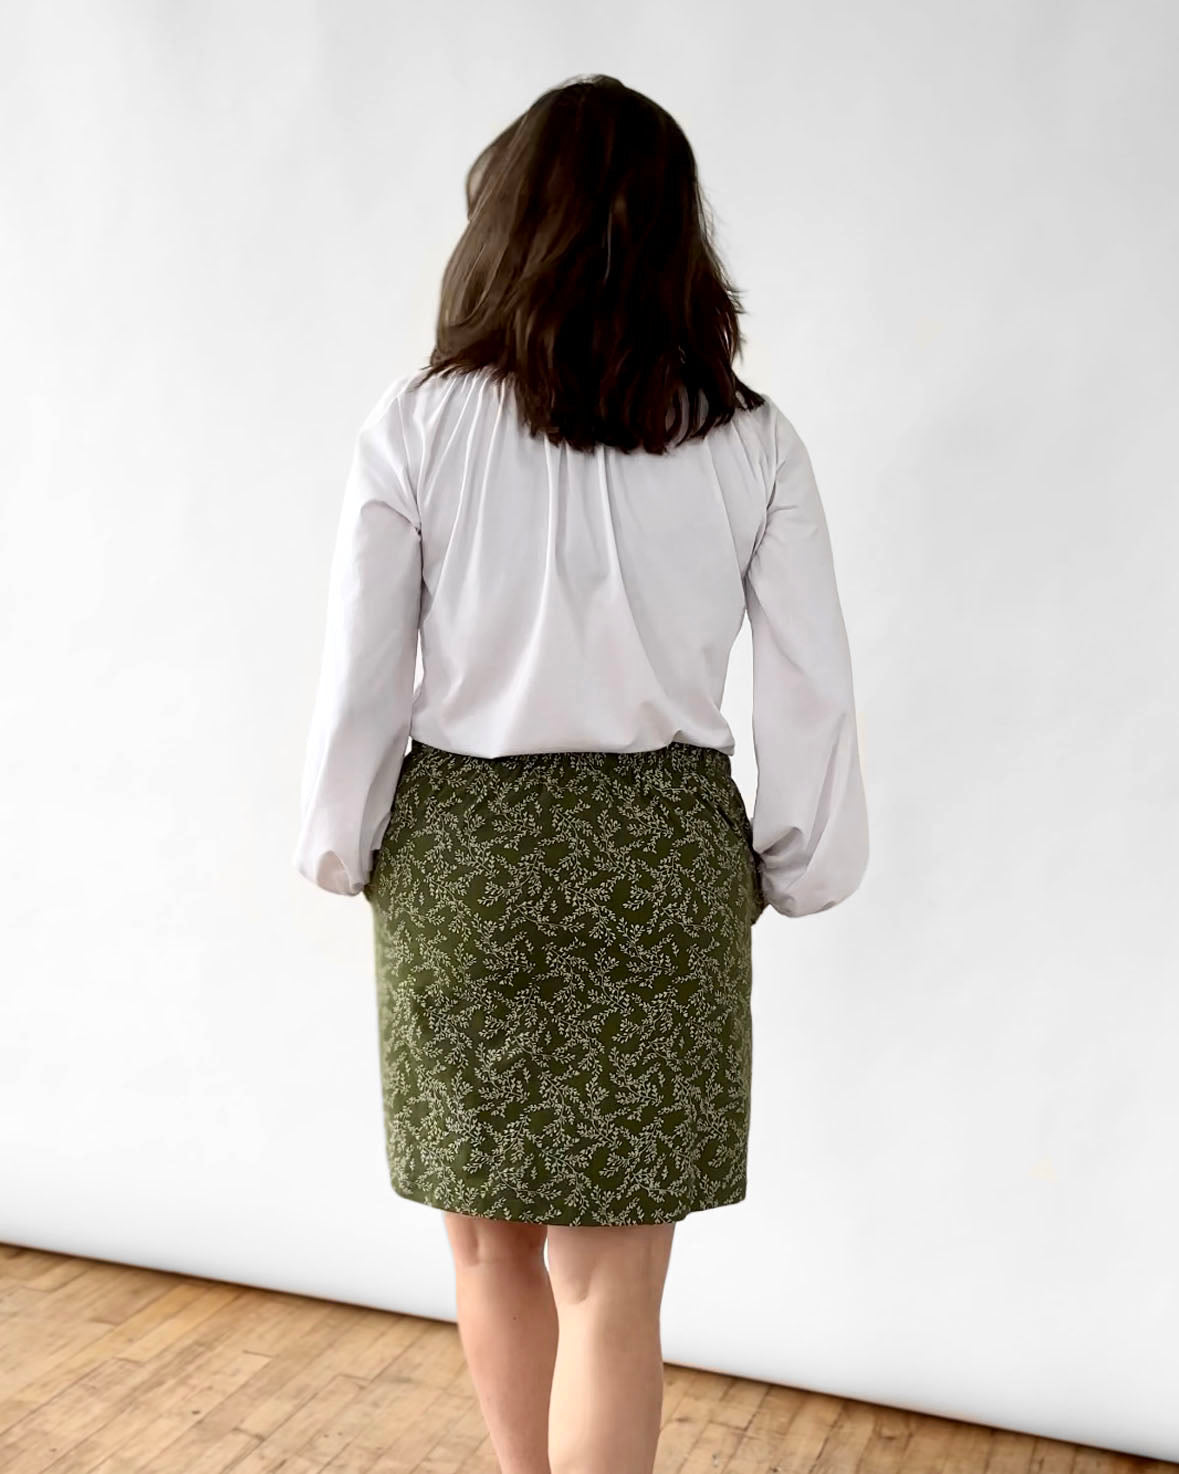 ELISE printed skirt in Olive/Ivory